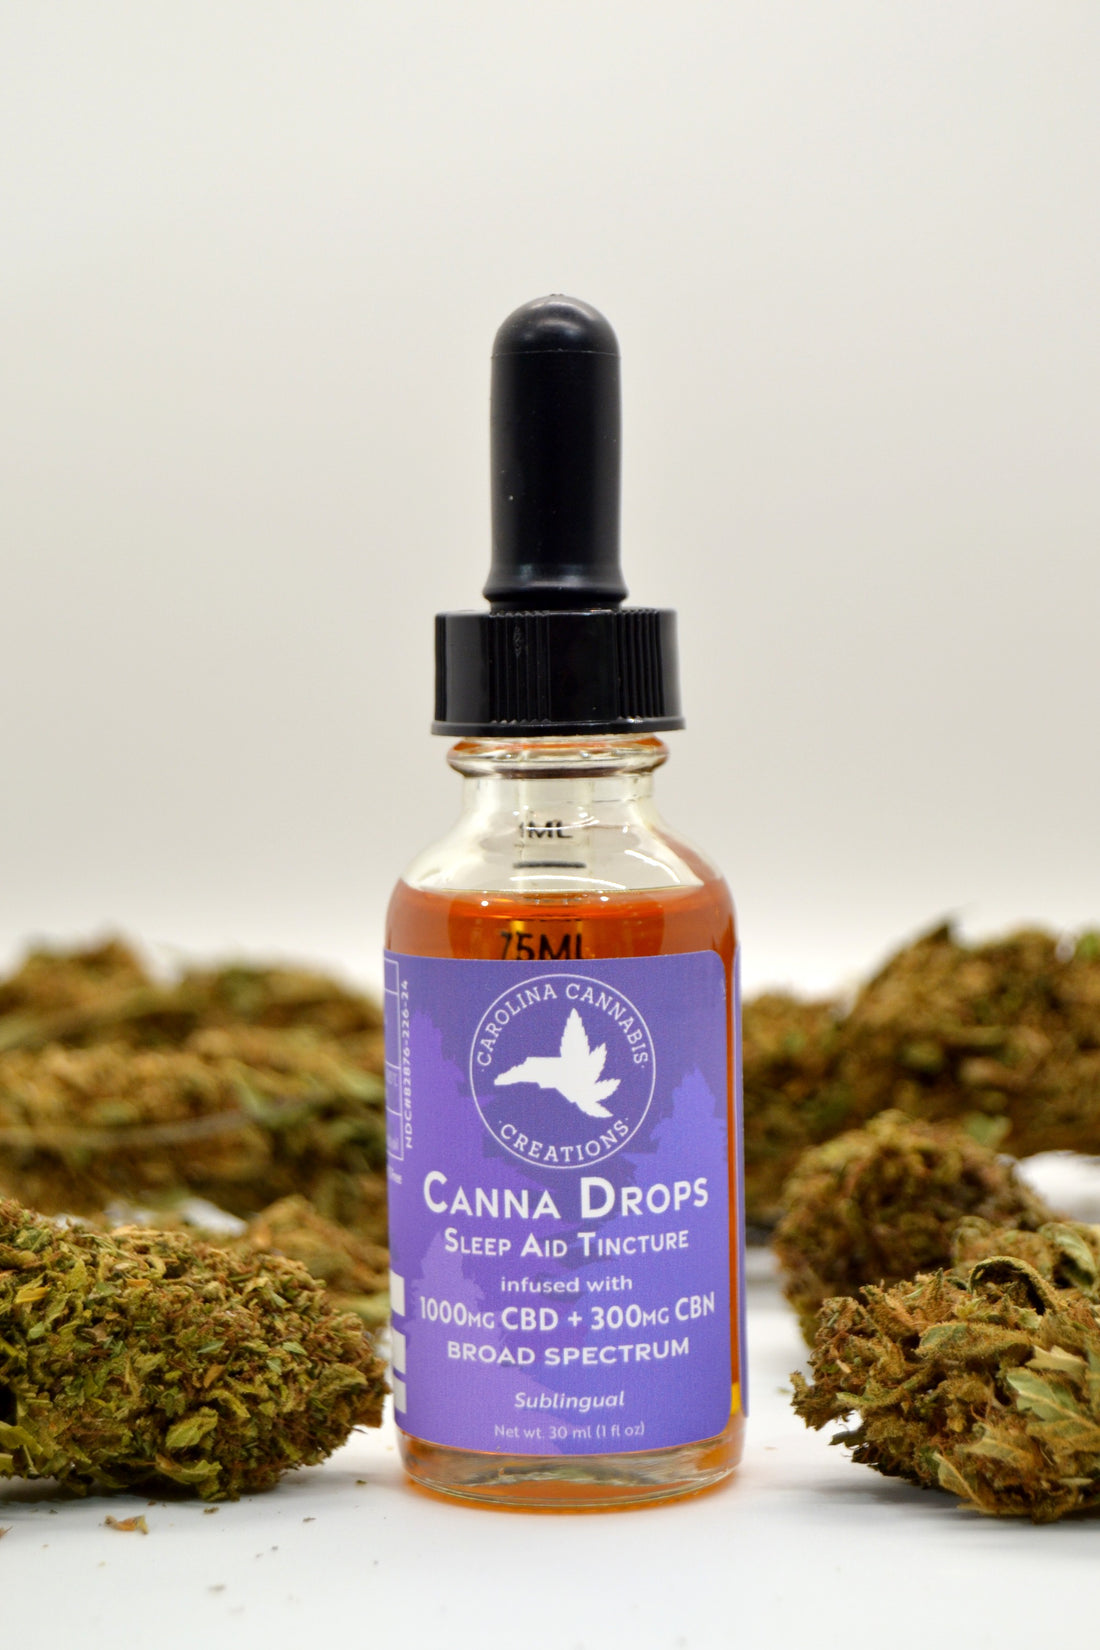 Canna Drops CBN Sleep Aid tincture - Carolina Cannabis Creations